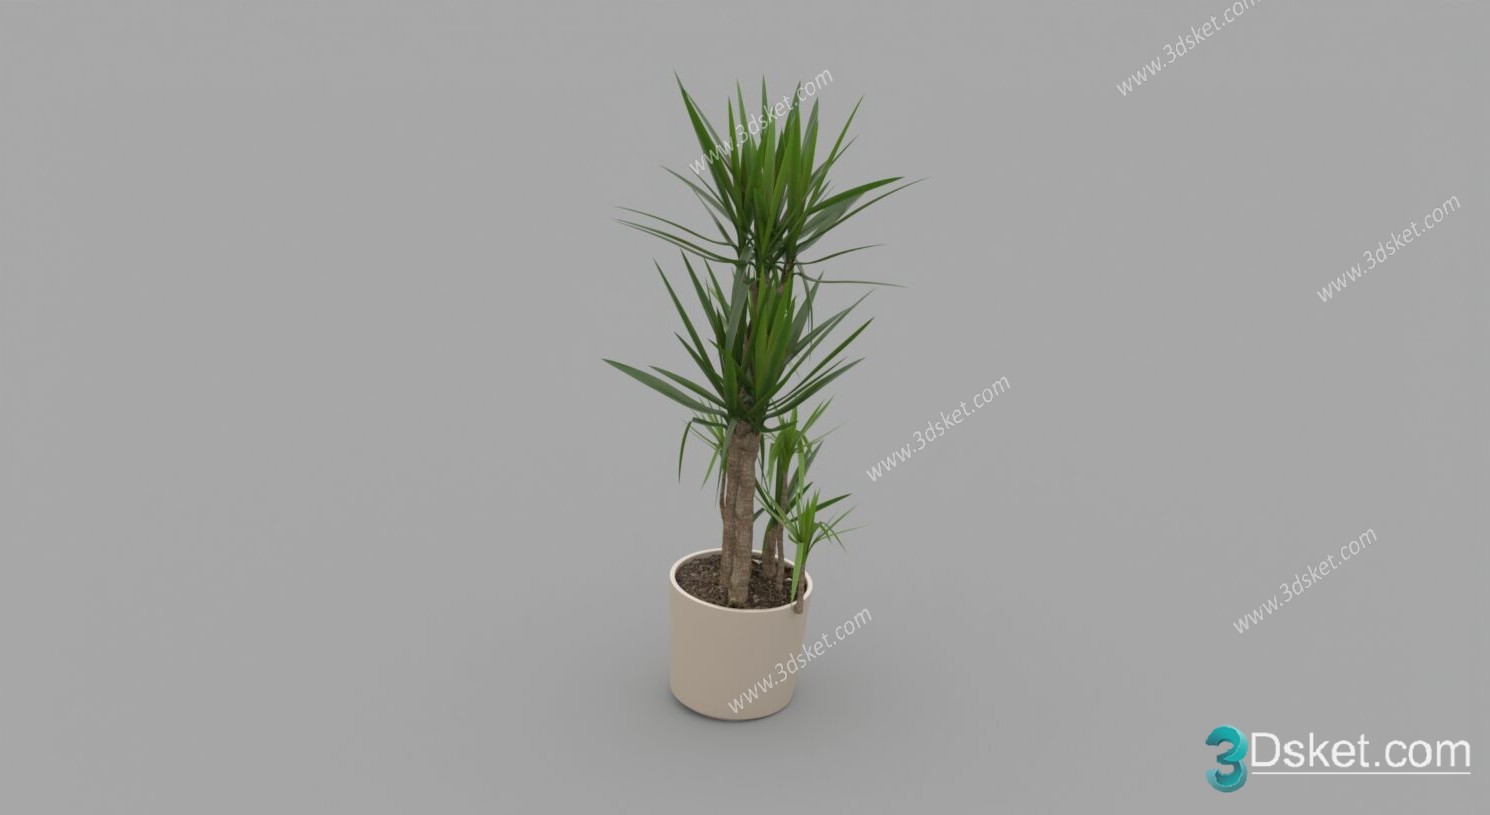 3D Model Tree Free Download T033